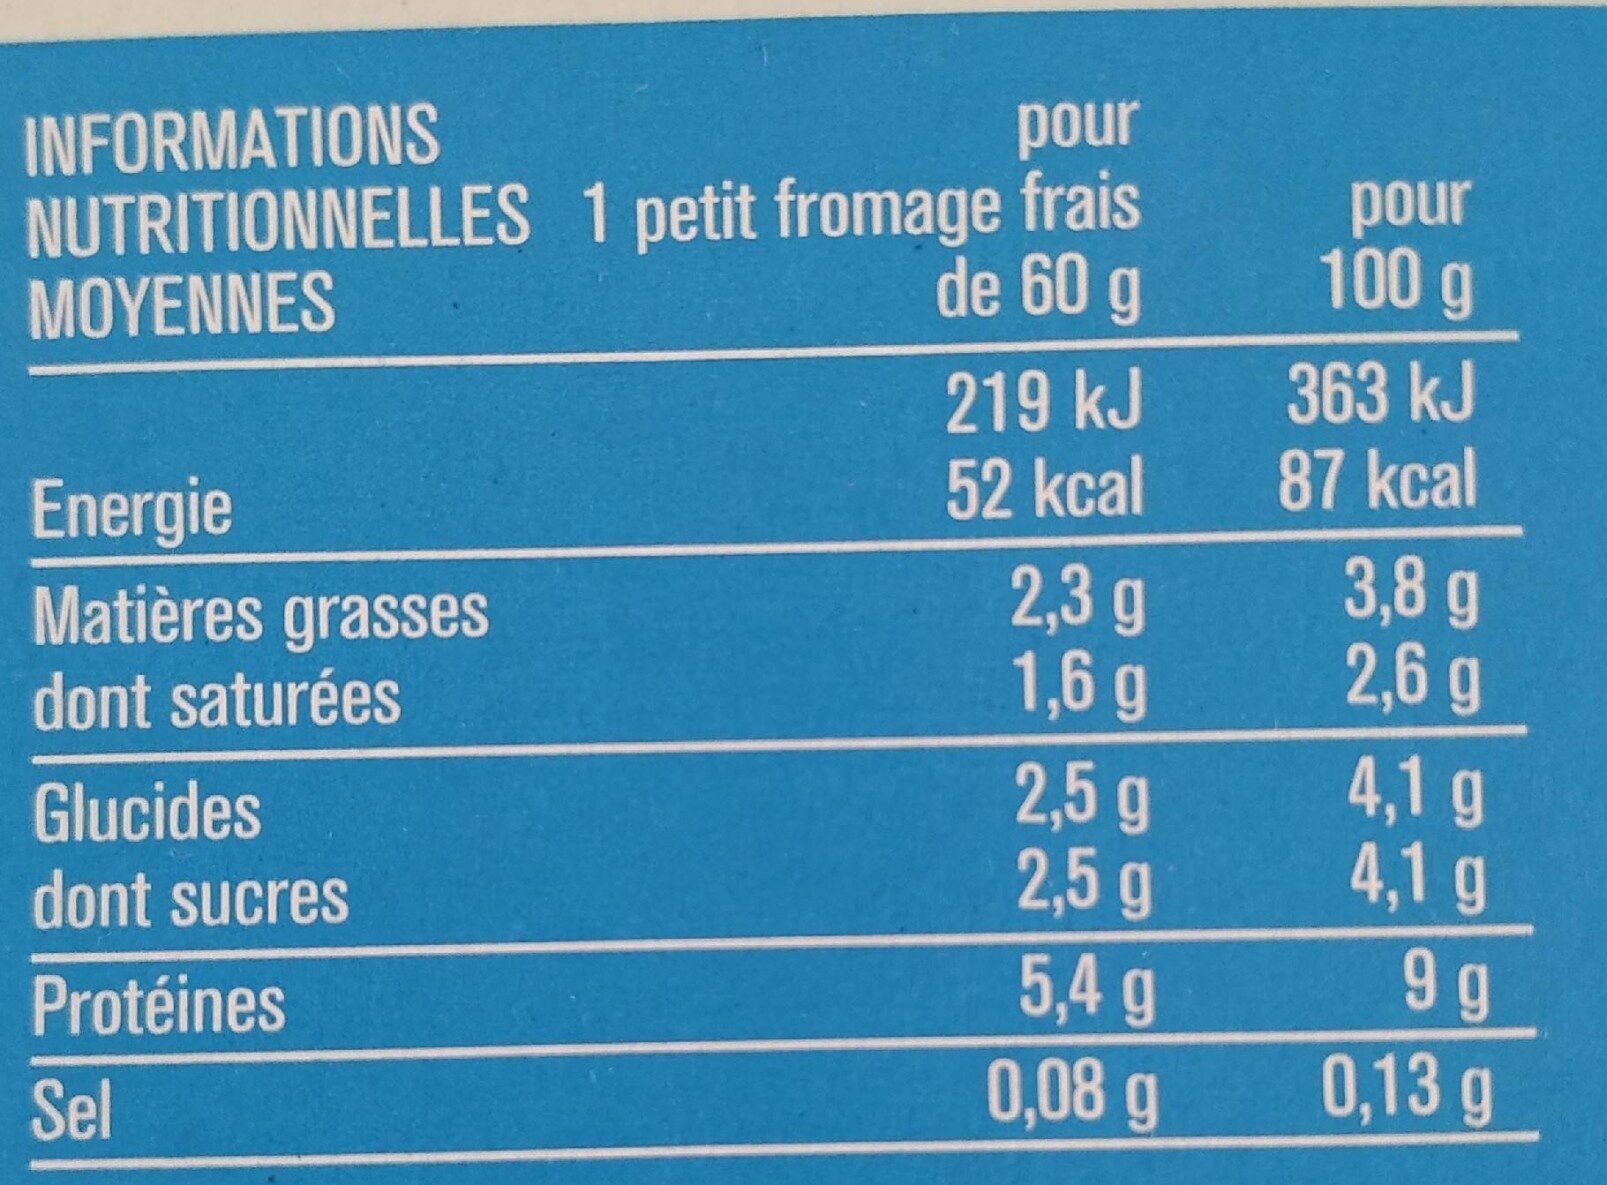 Petits fromages frais nature - Nutrition facts - fr